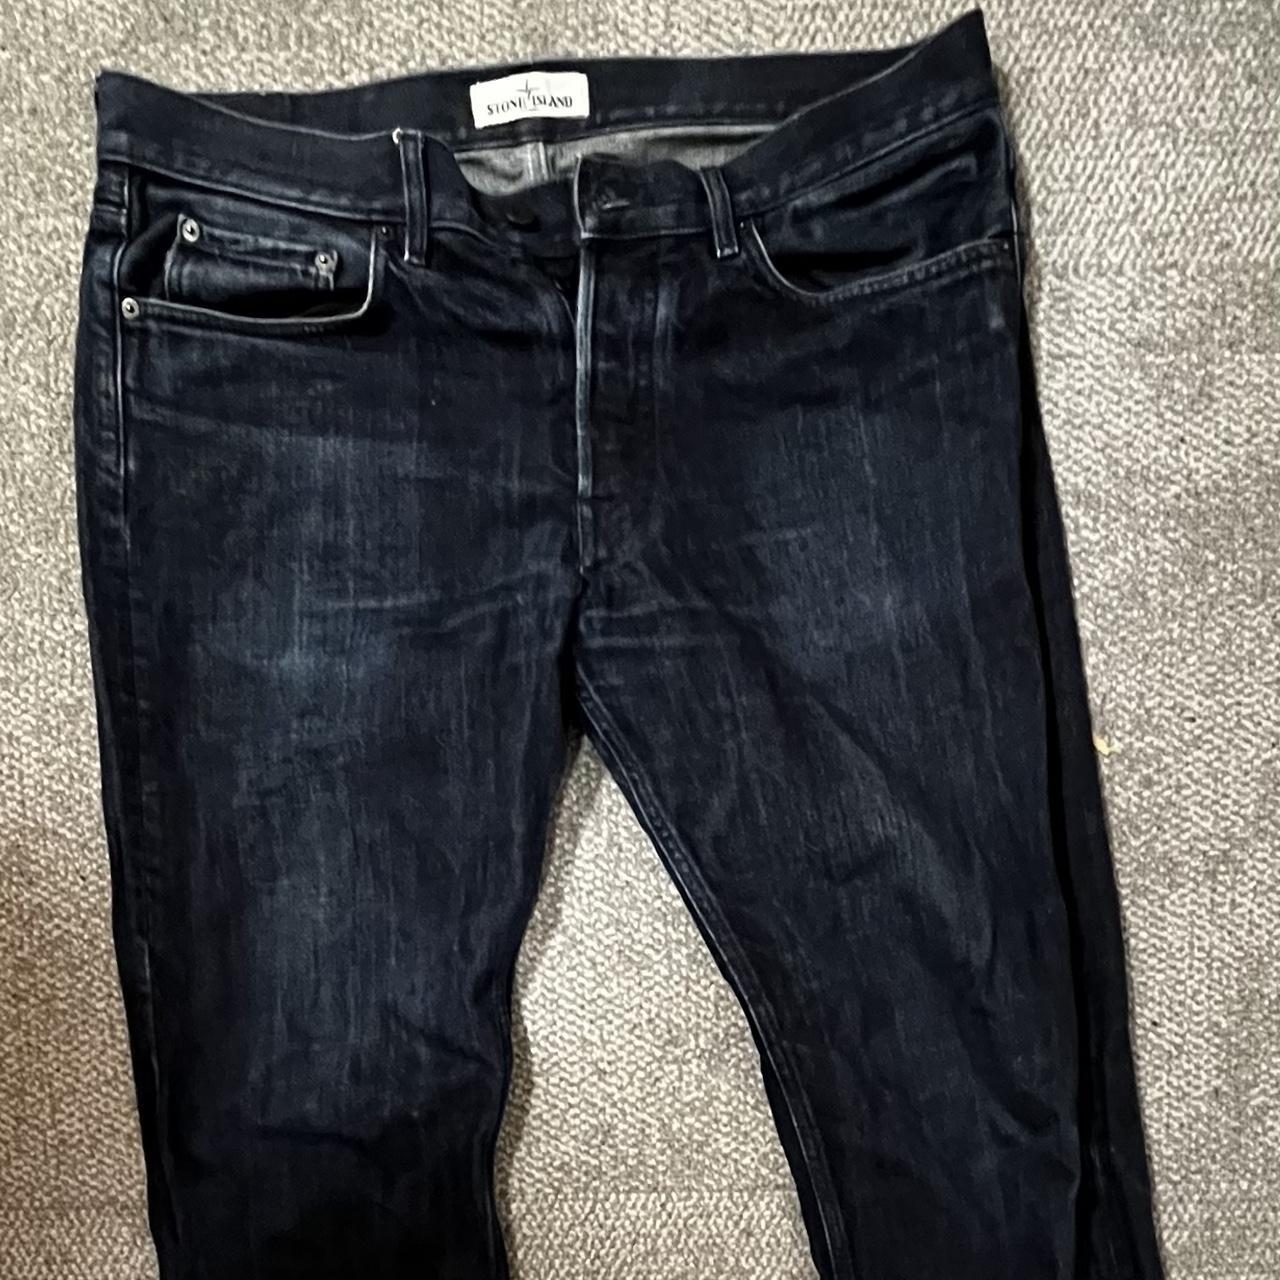 stone island jeans. w34 l34. good condition. good... - Depop